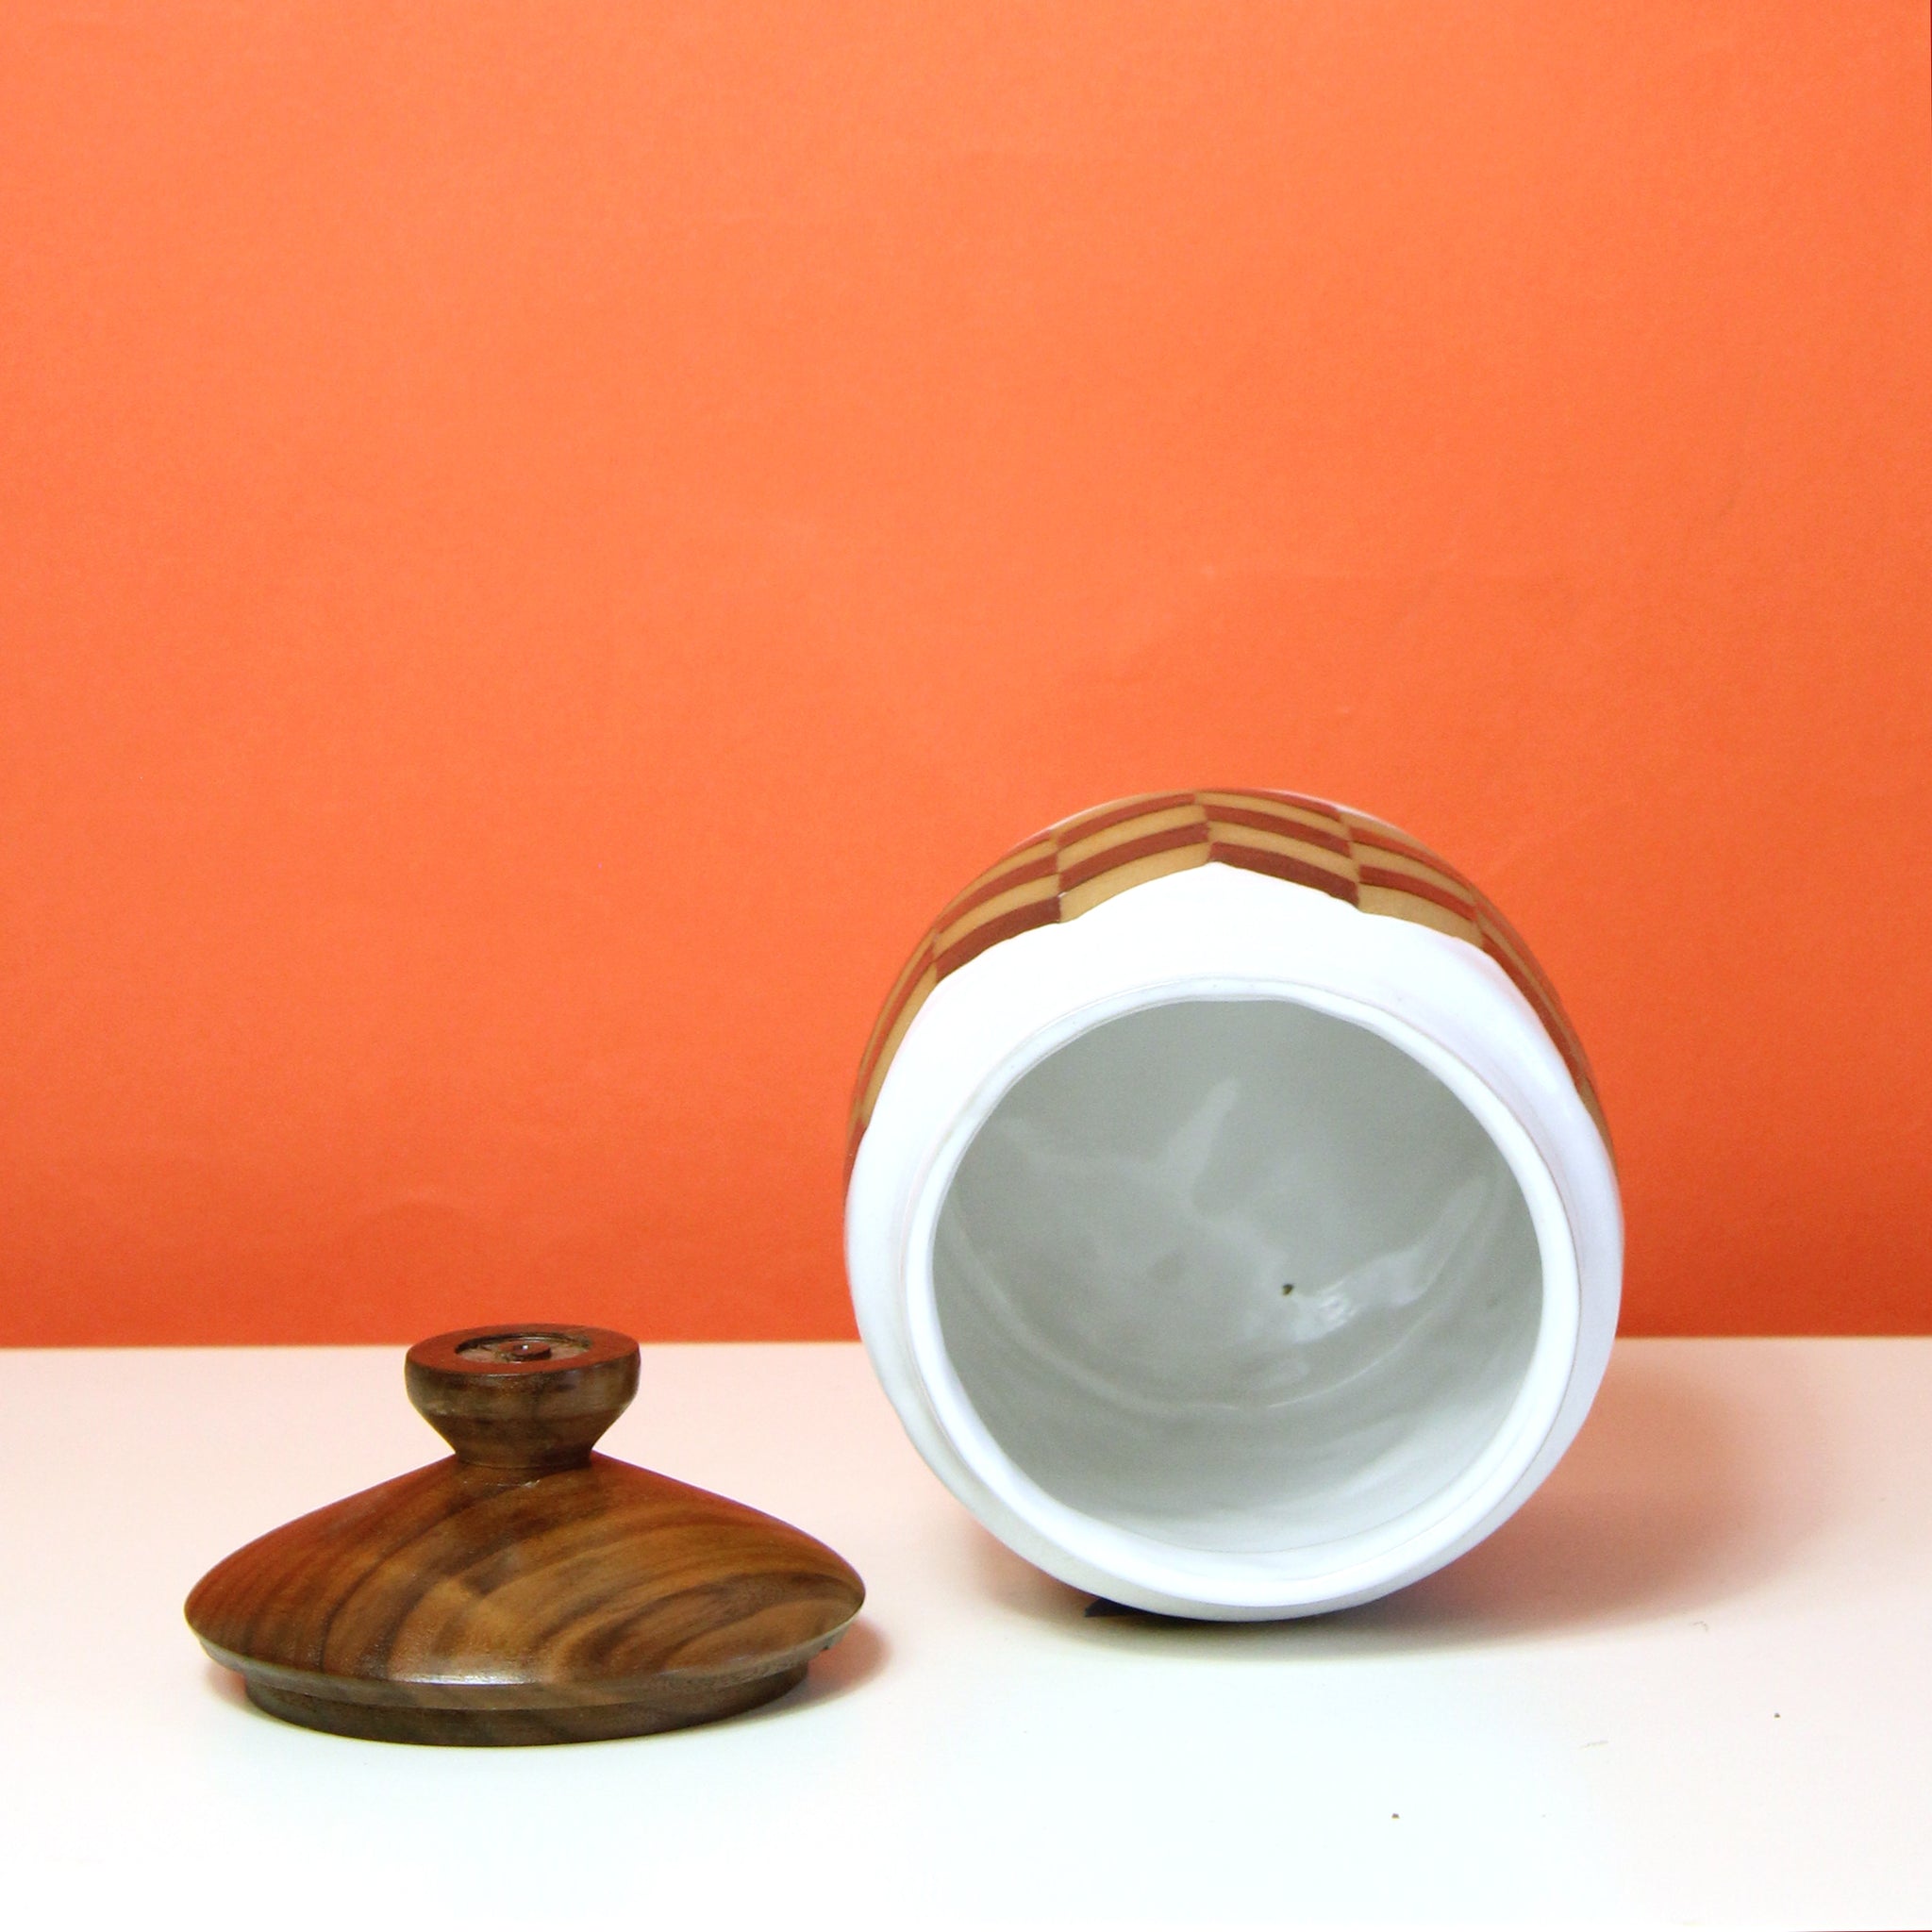 Glazed Stoneware Jar with Chevron Pattern (SECOND)